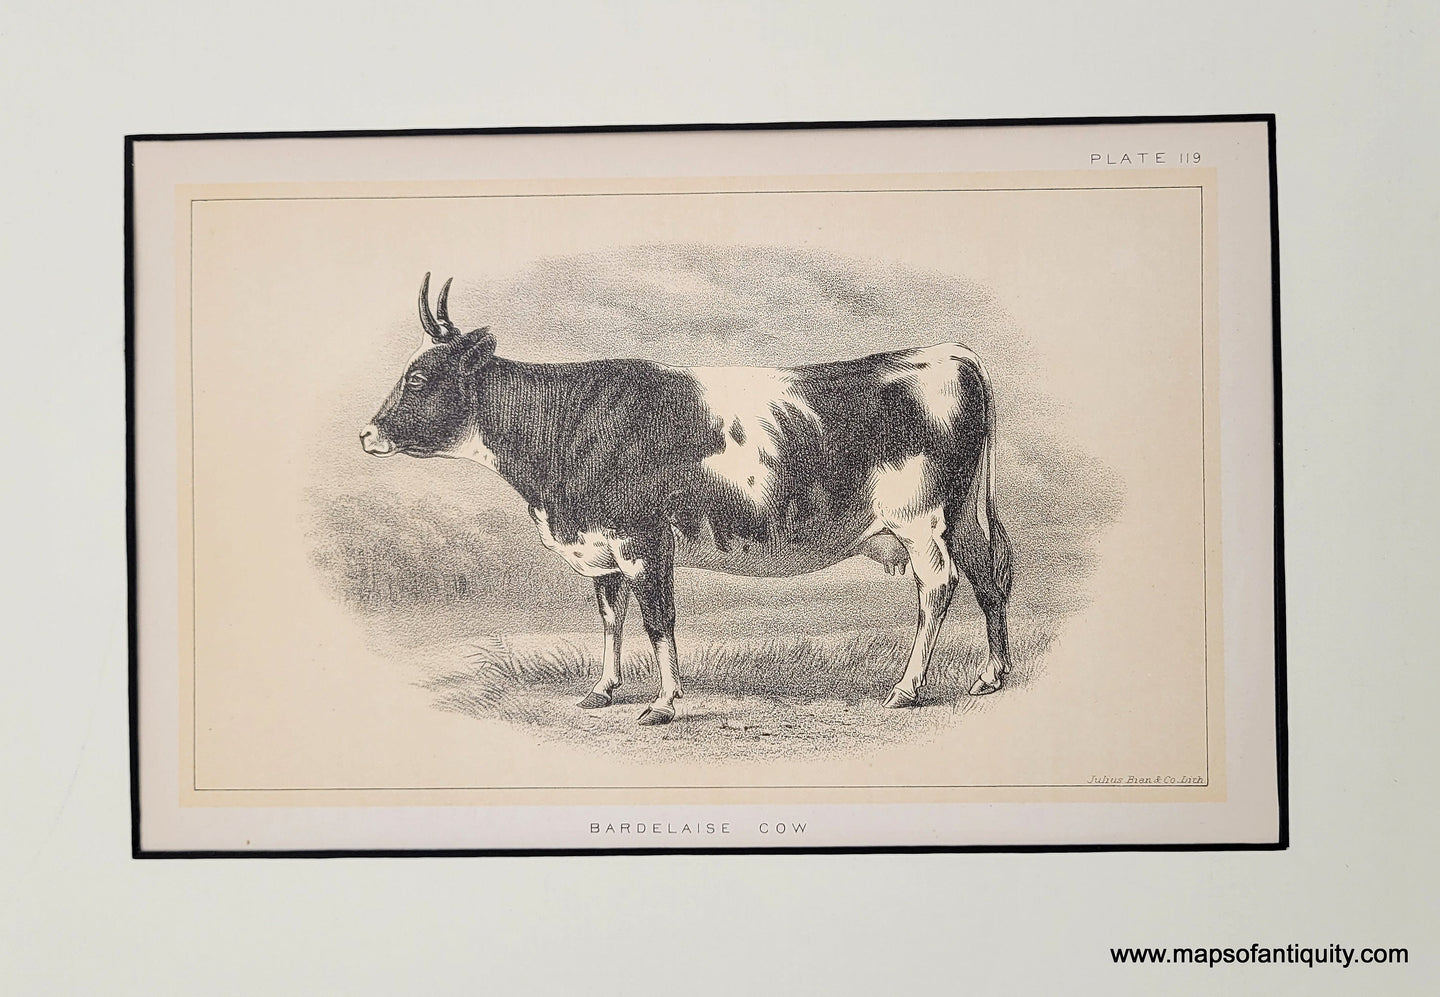 Genuine-Antique-Print-Bardelaise-Cow---Plate-119-1888-Bien-Maps-Of-Antiquity